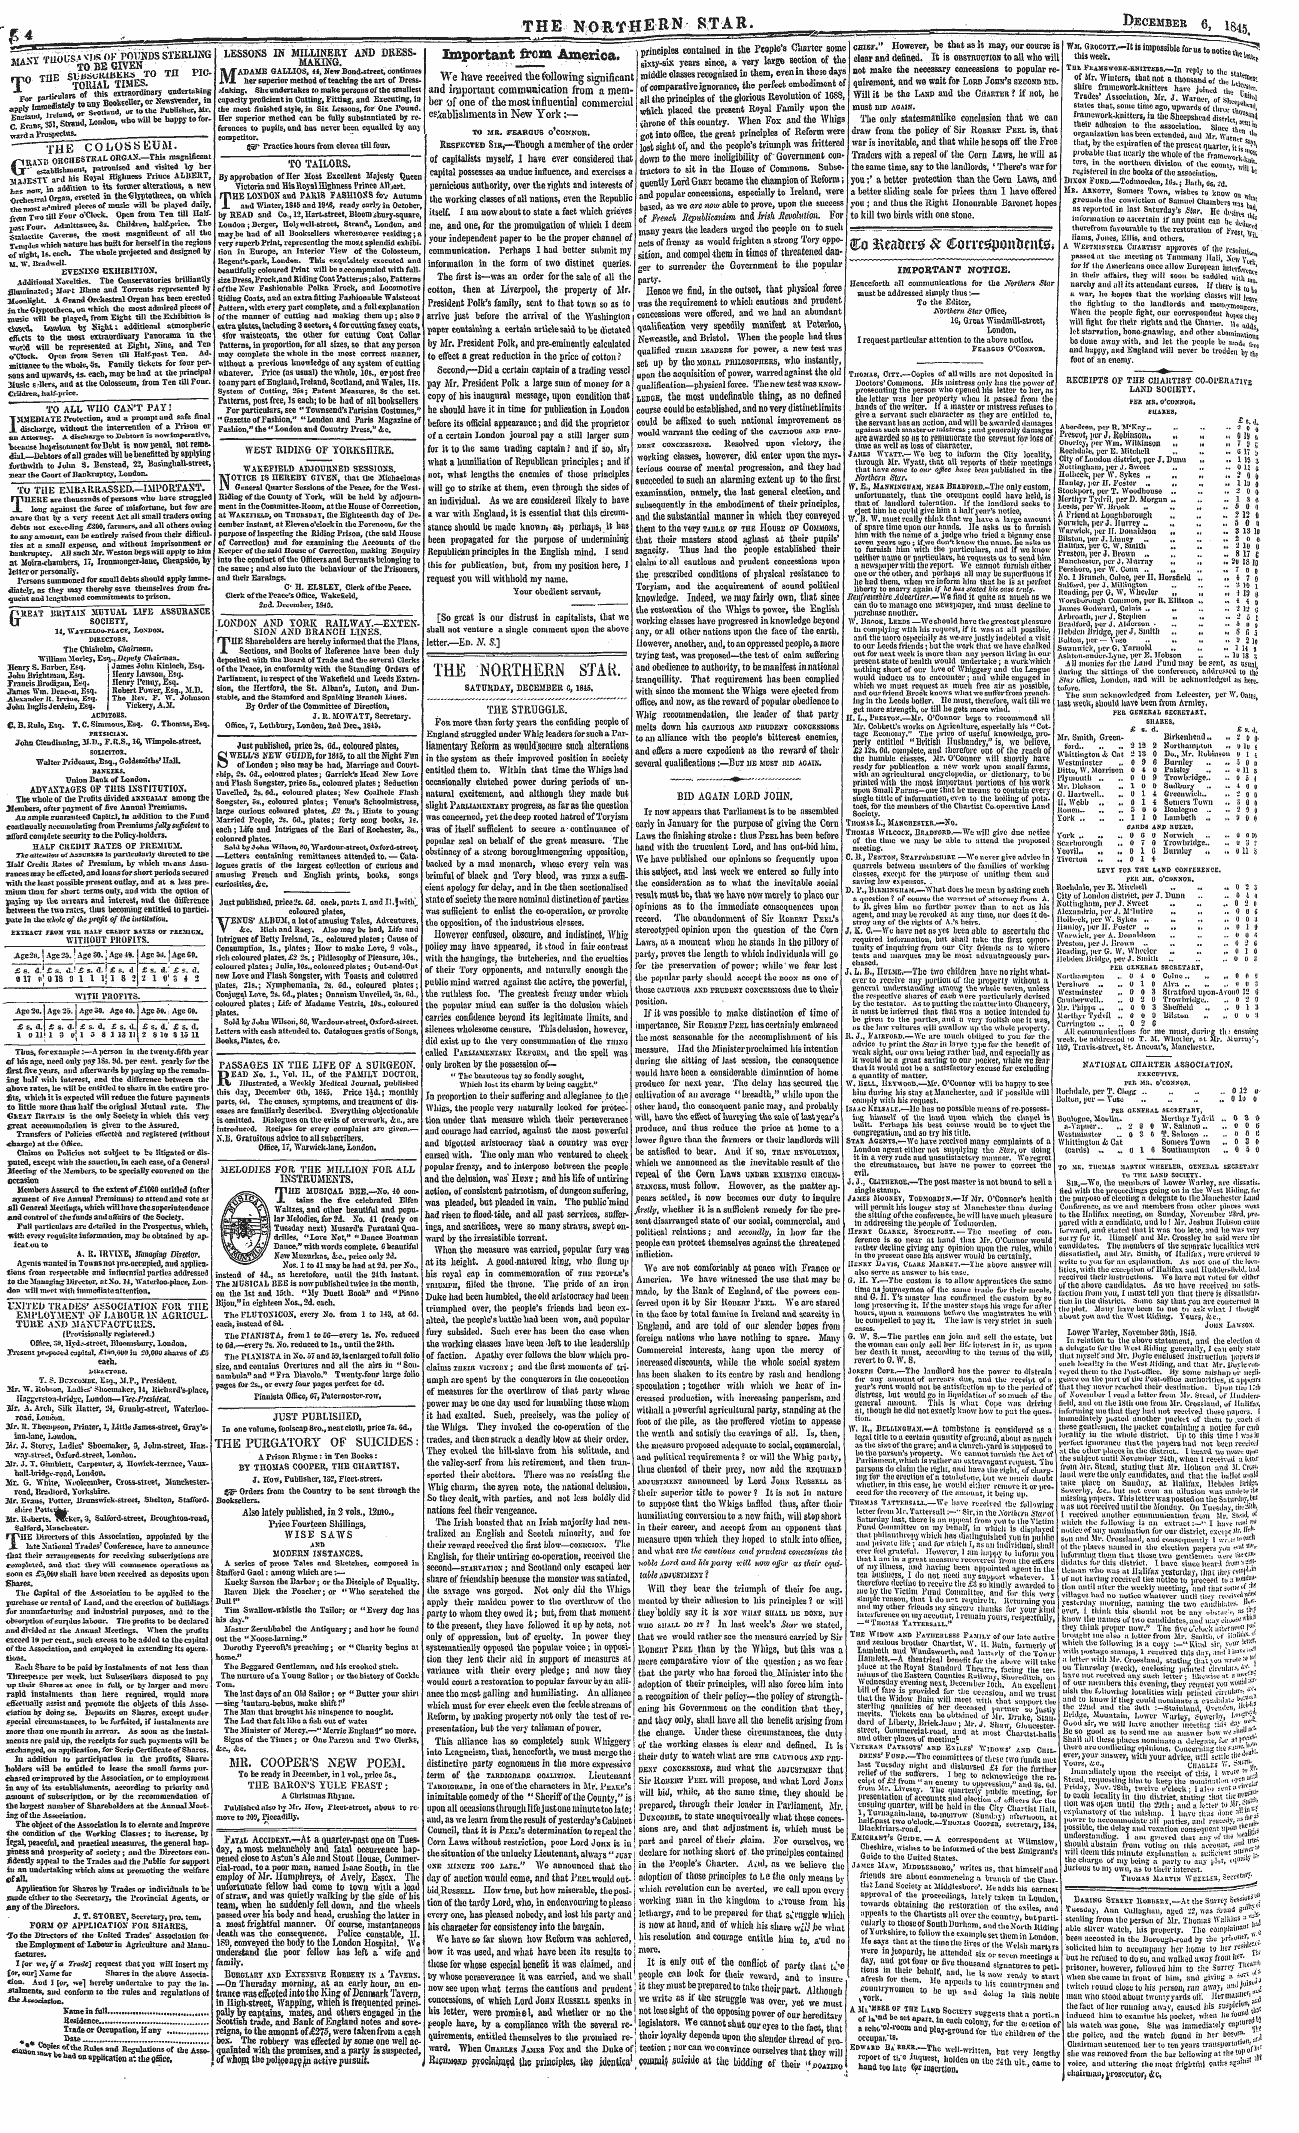 Northern Star (1837-1852): jS F Y, 3rd edition - Ad00417